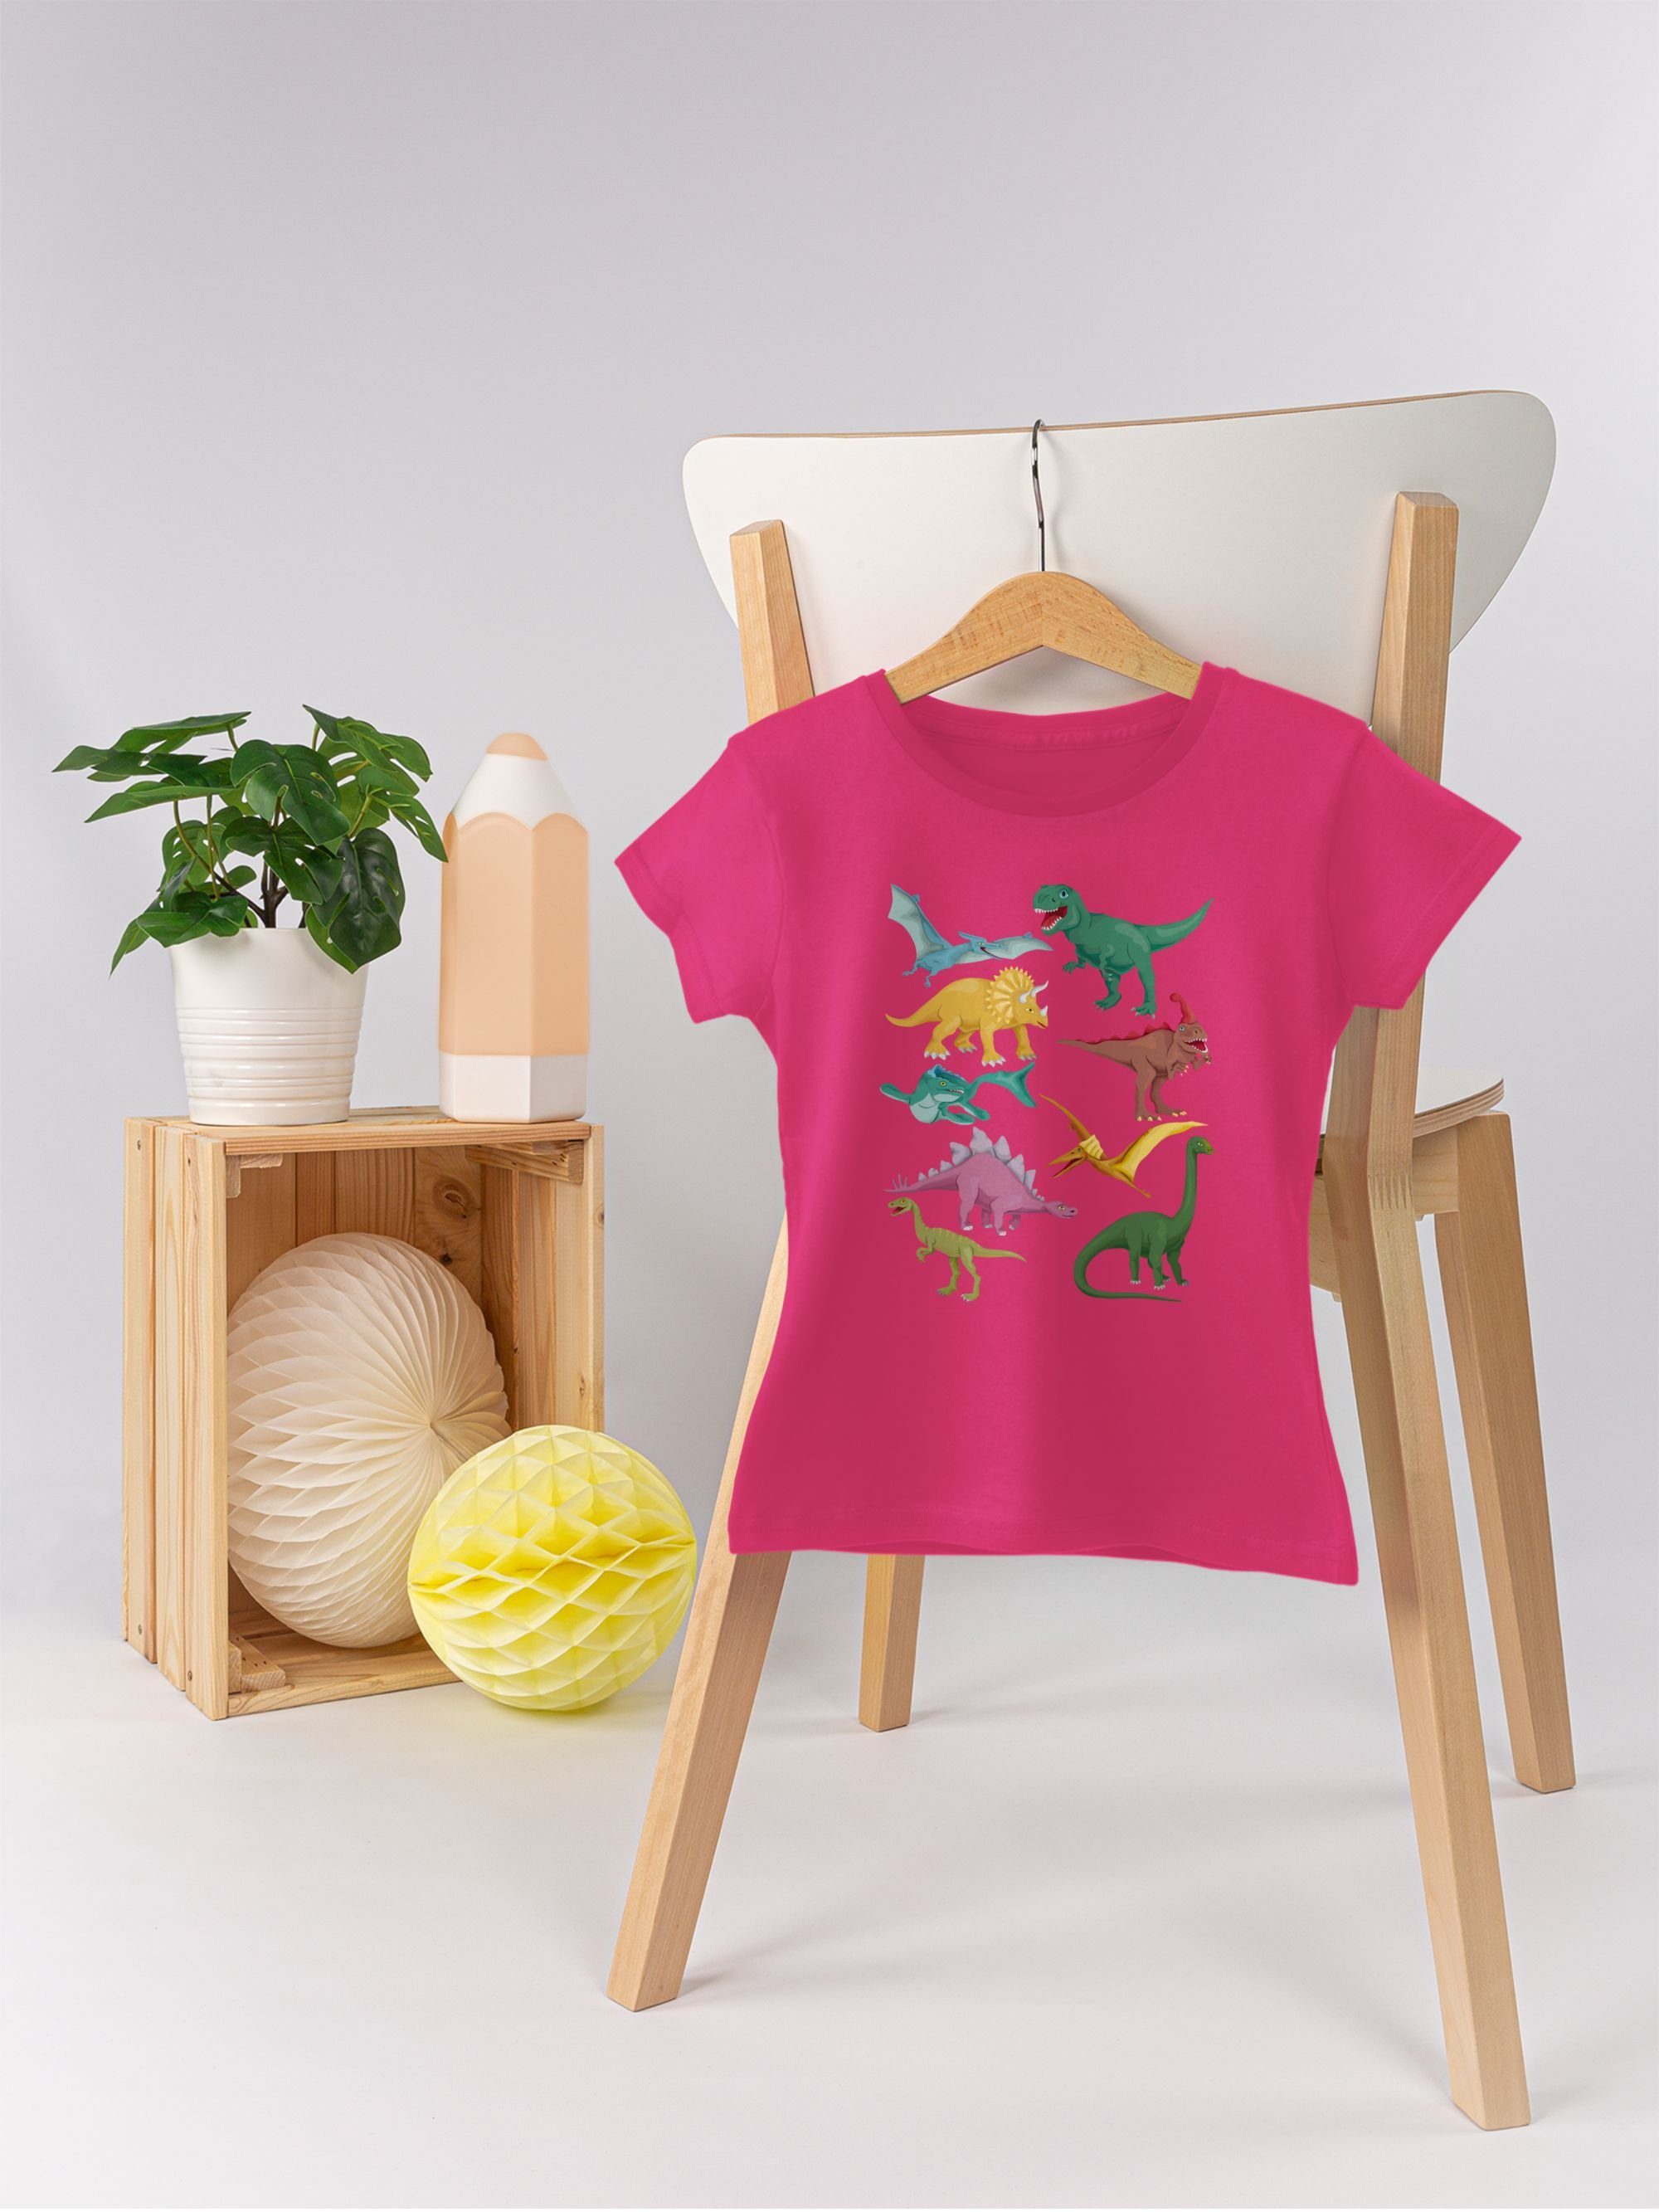 Dinos Tiermotiv Animal 1 Shirtracer Print Fuchsia T-Shirt